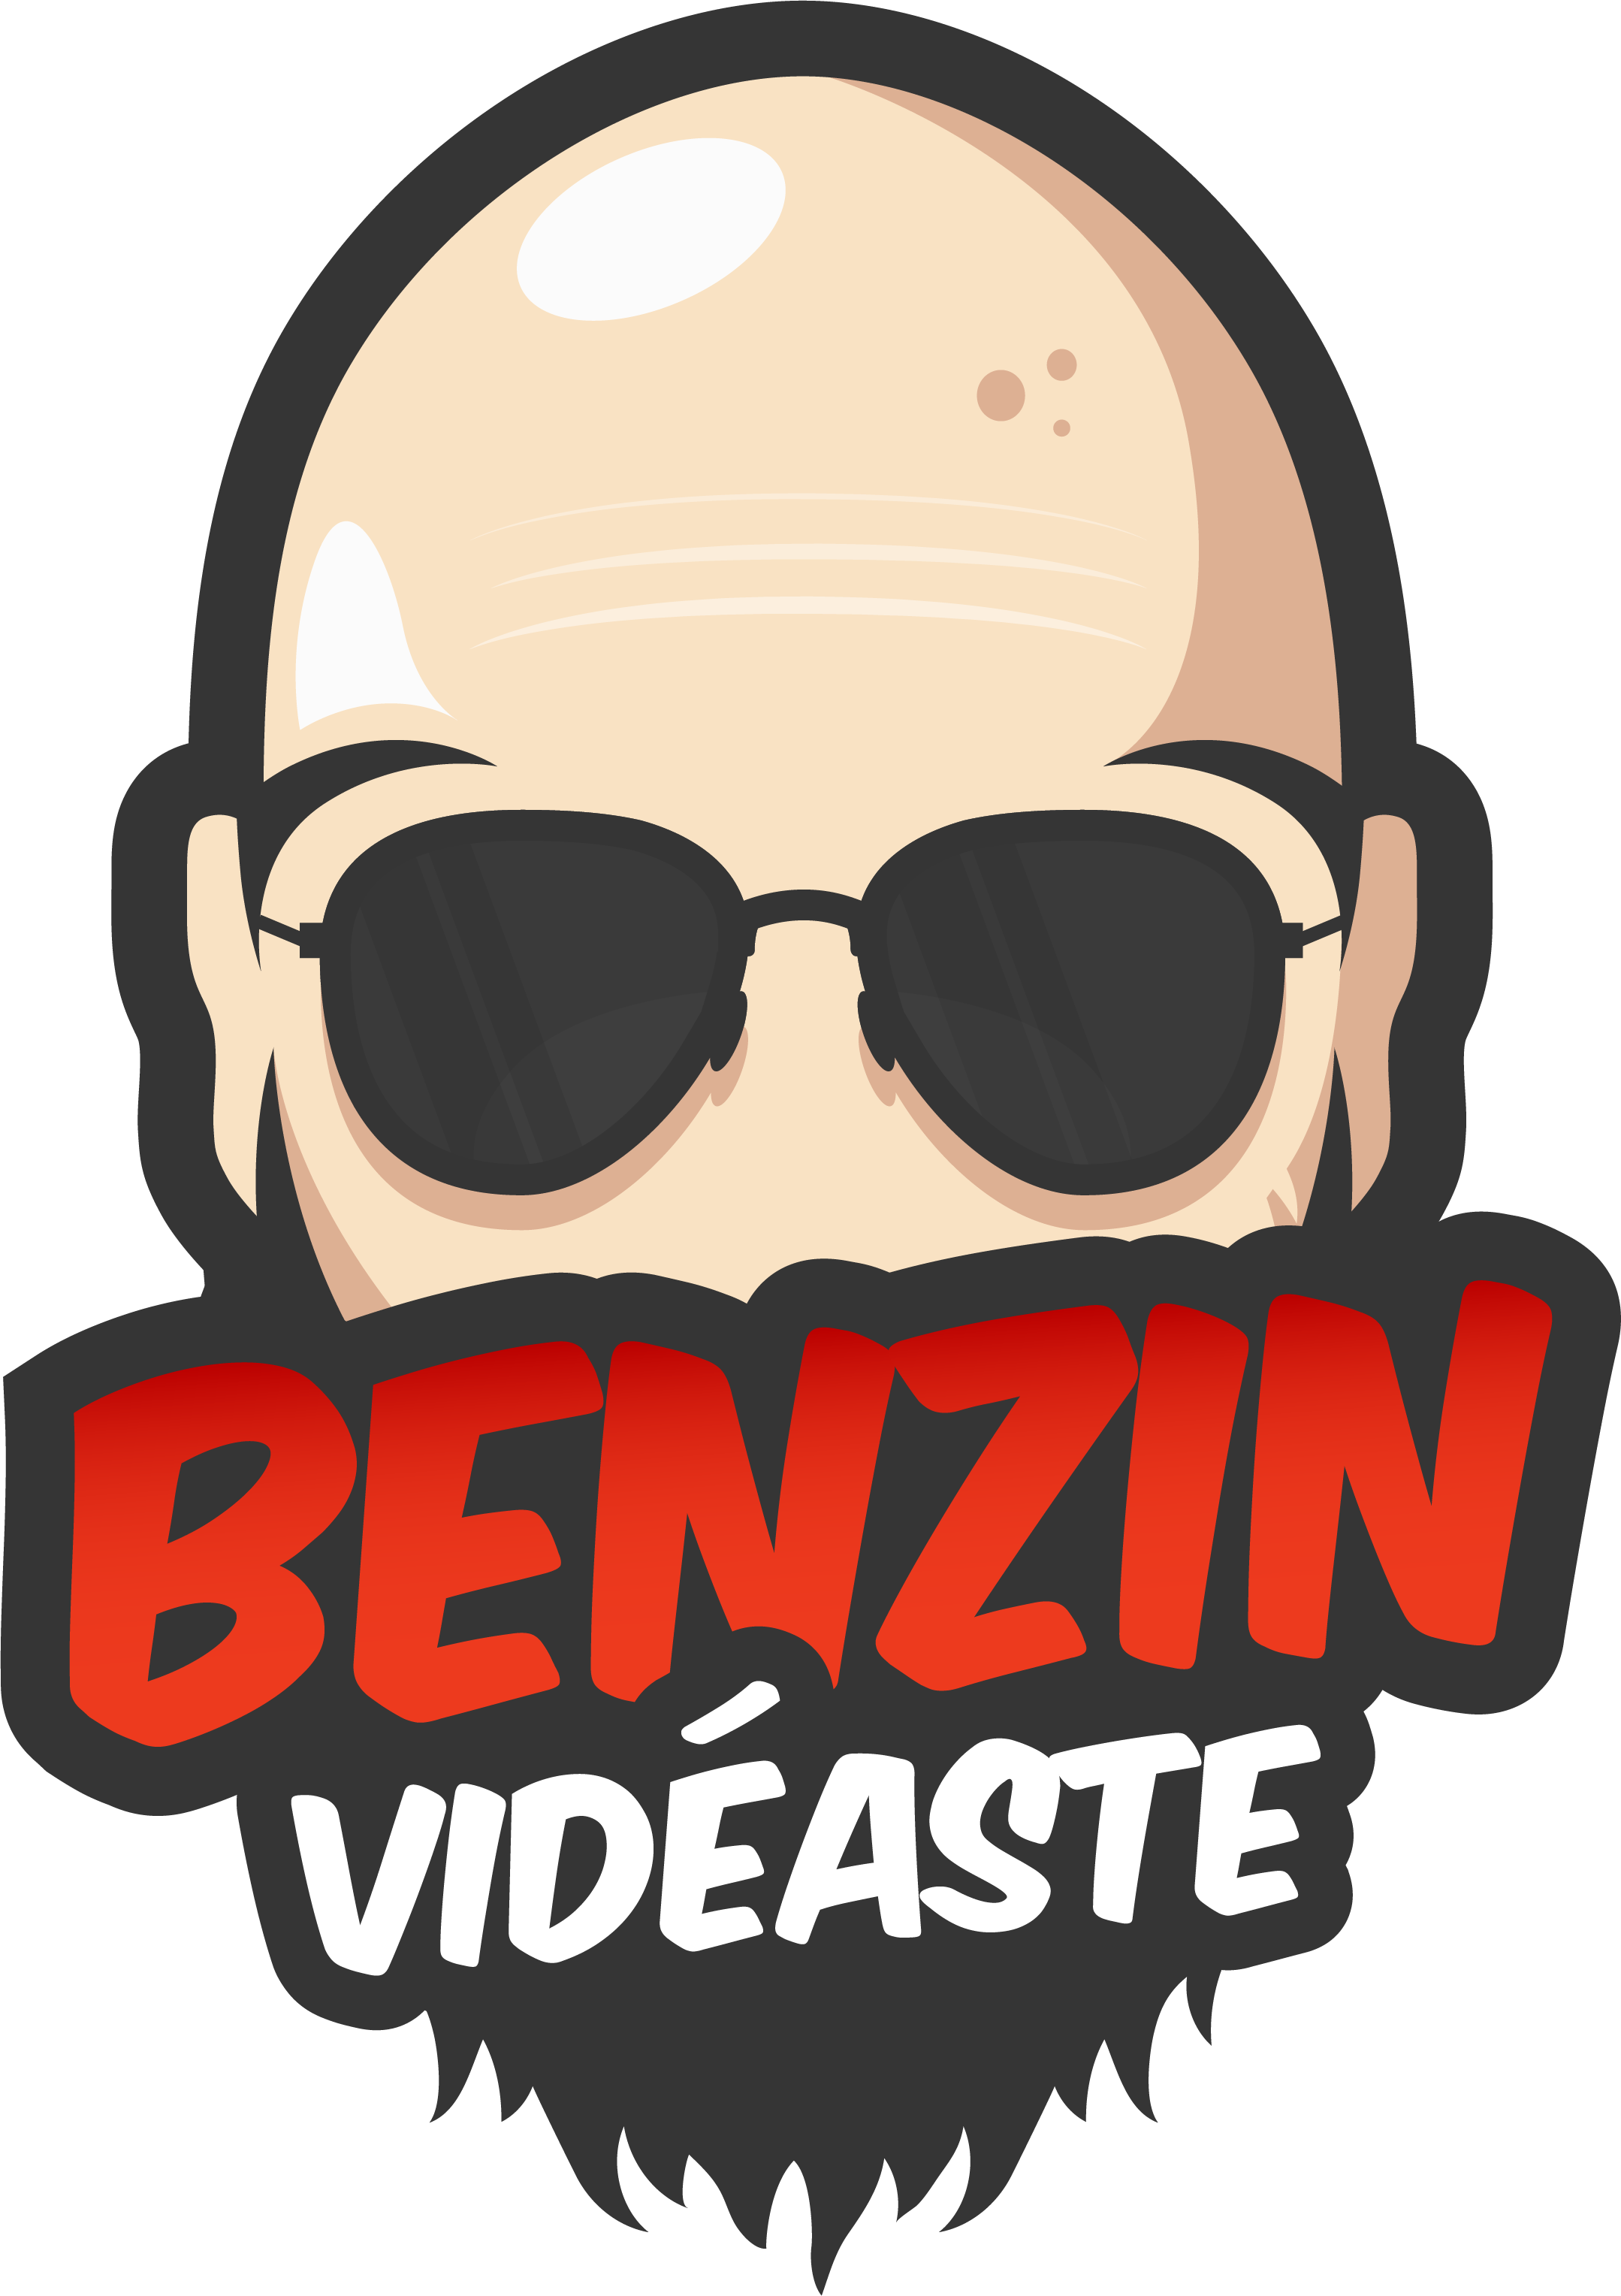 BENZIN VIDEASTE